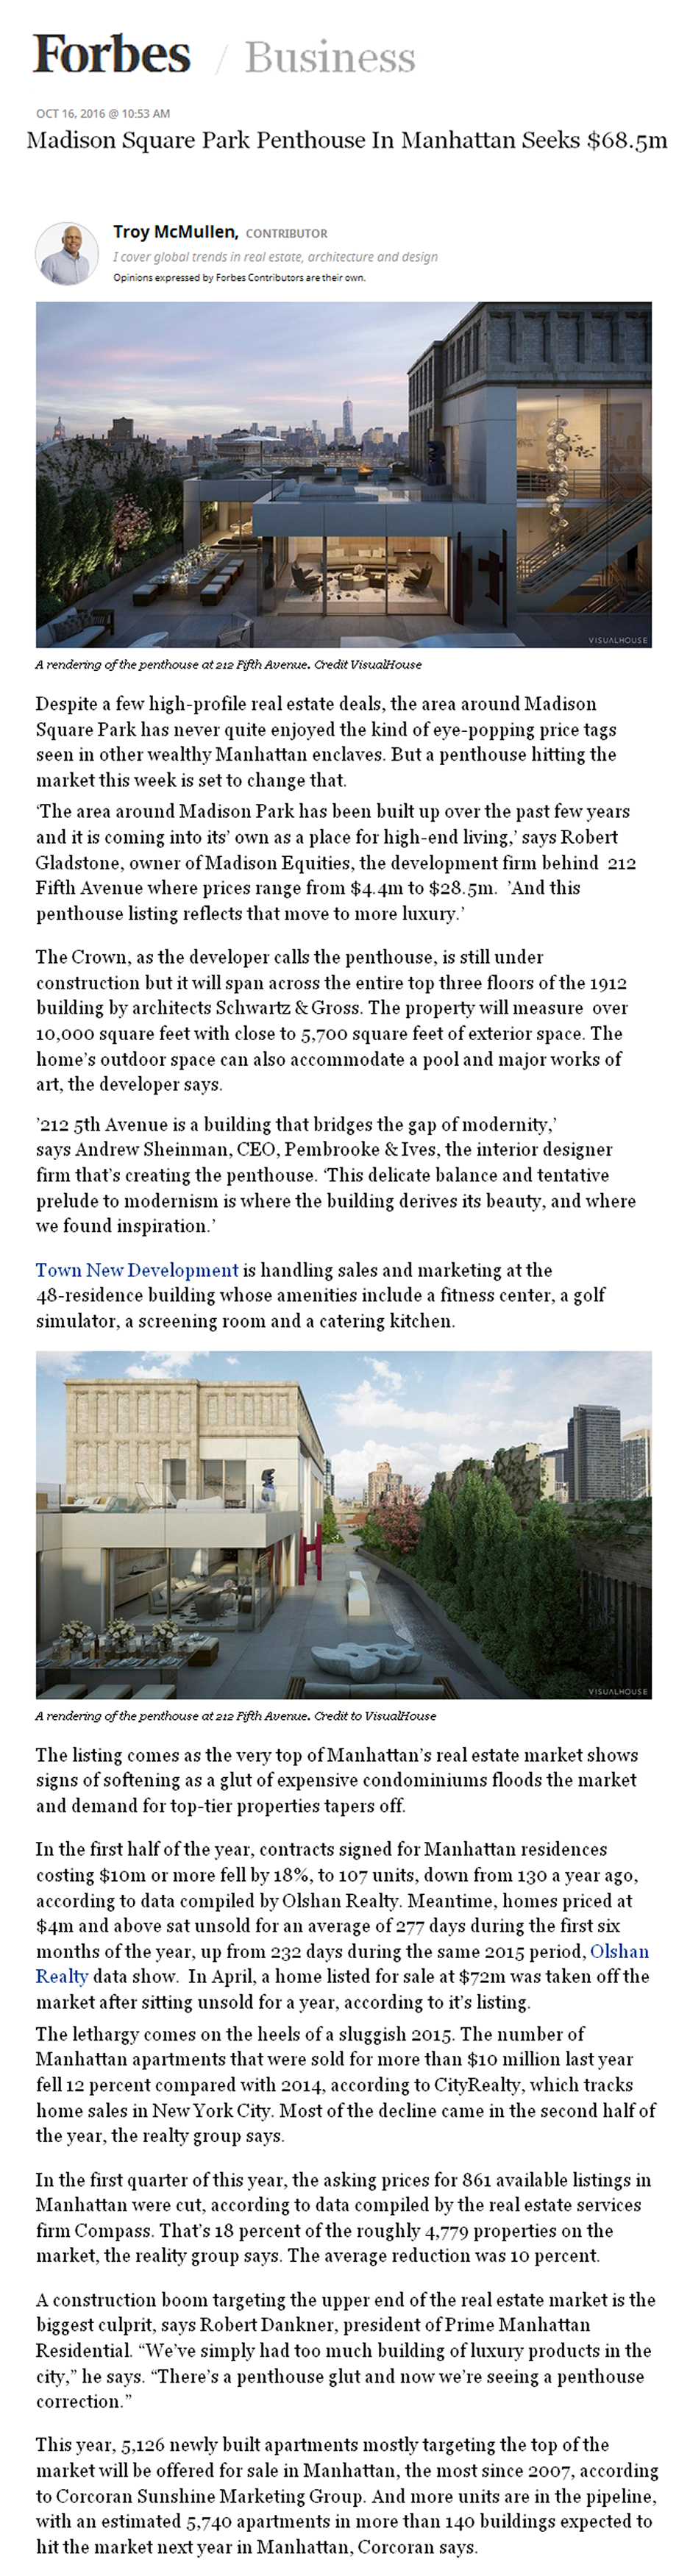 Madison Square Park Penthouse in Manhattan Seeks 68 million dollars part 1